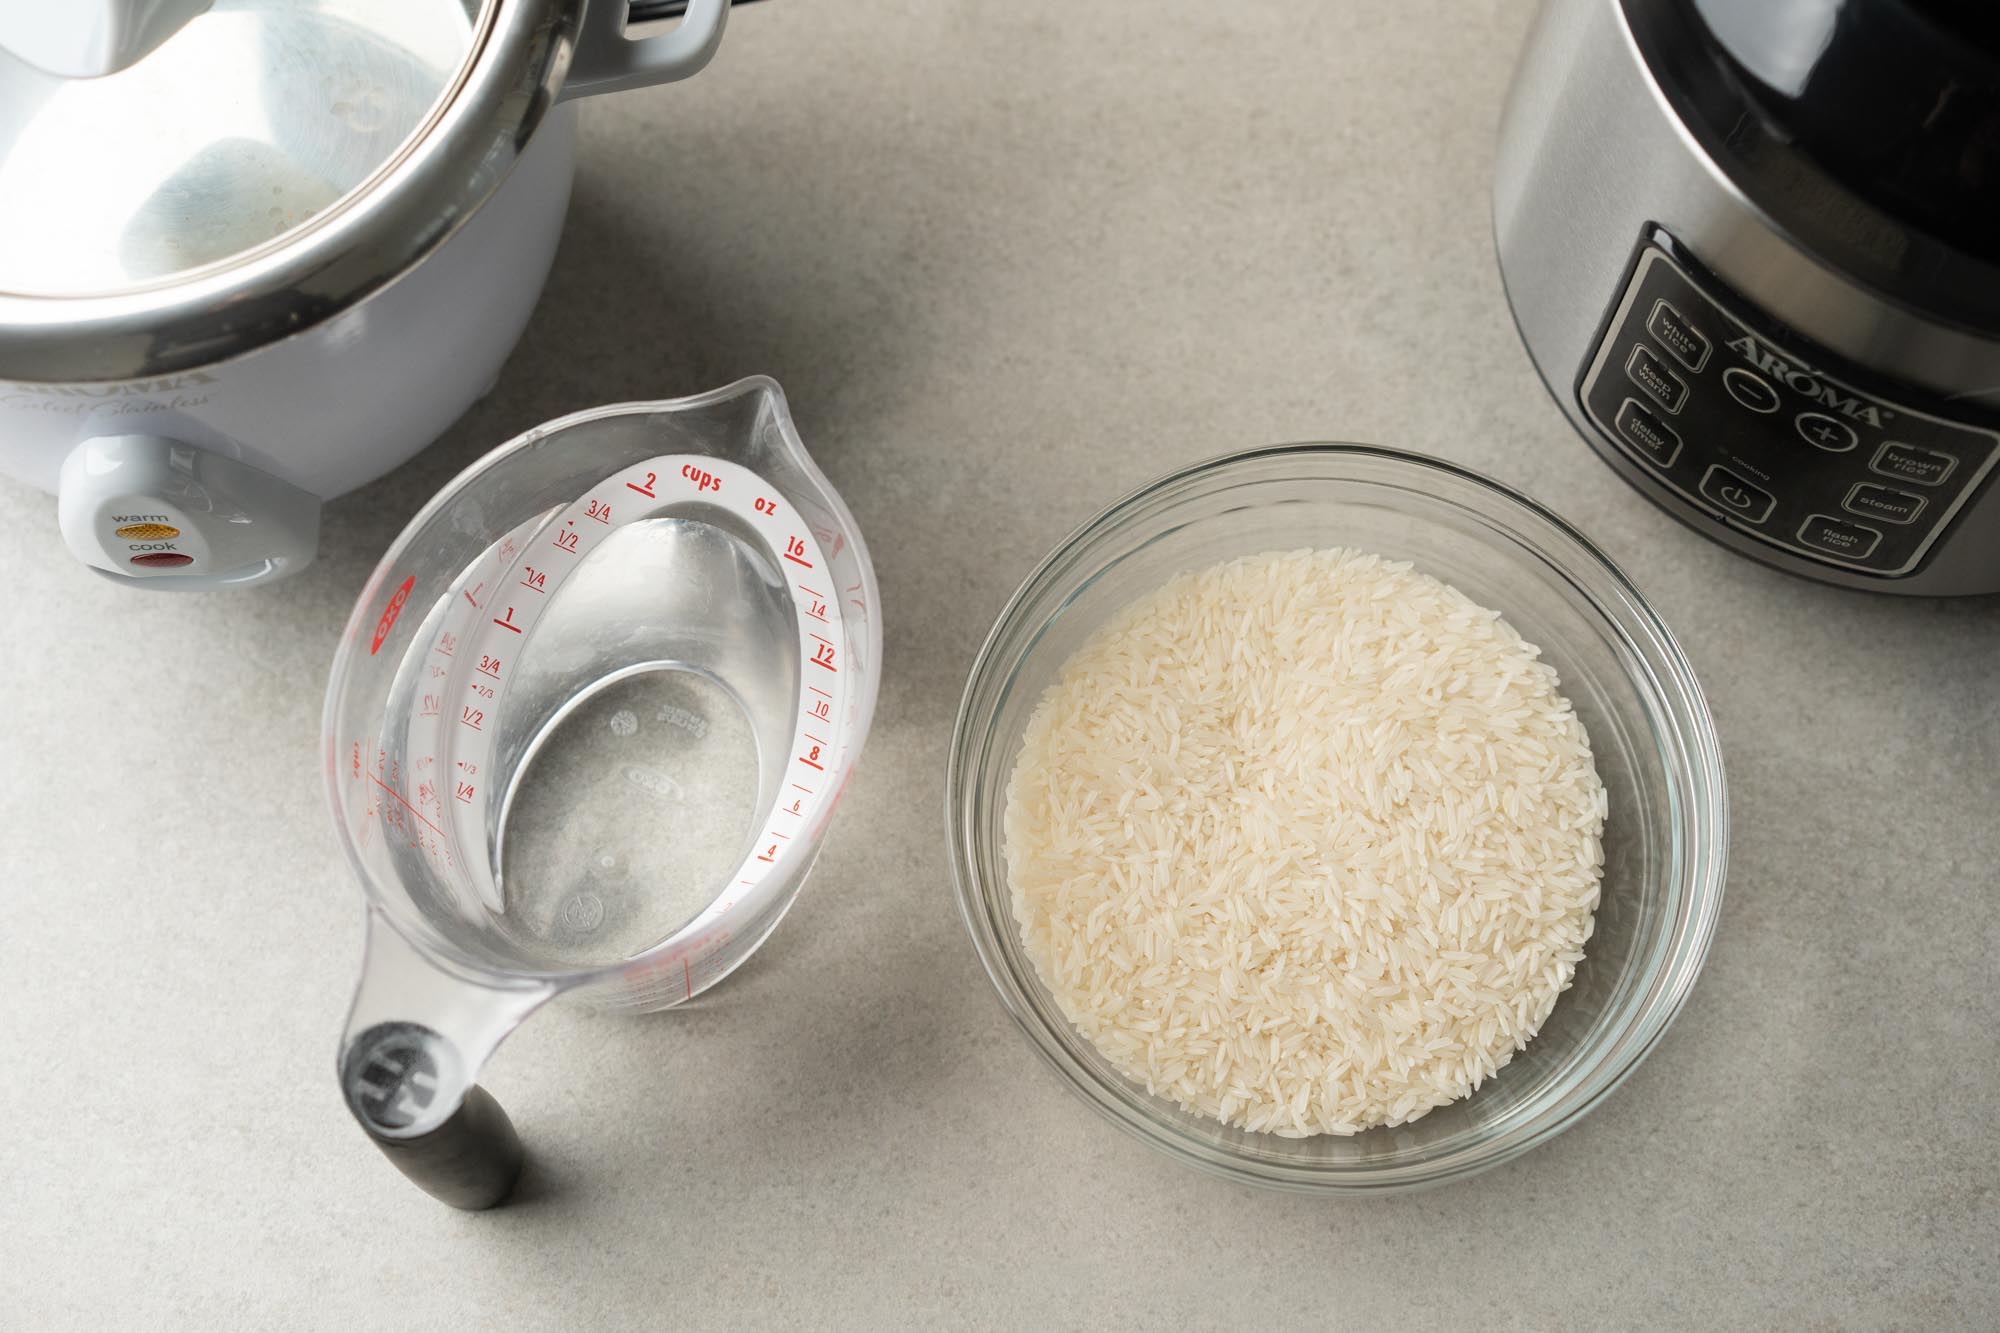 Aroma Professional Digital Rice and Grain Multicooker